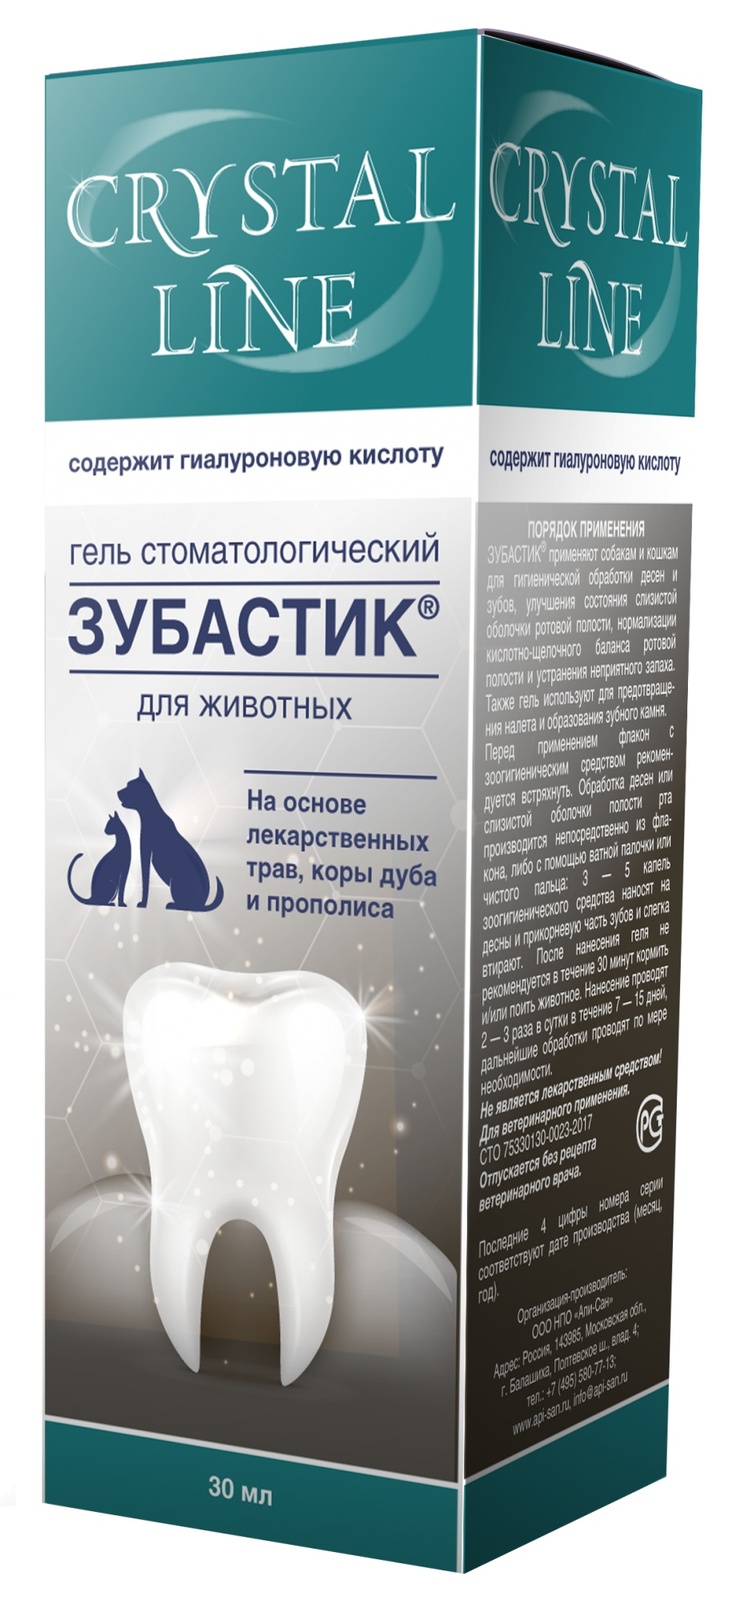 Apicenna Apicenna зубастик гель для чистки зубов Crystal line (30 г) apicenna apicenna зубастик гель для чистки зубов crystal line 30 г